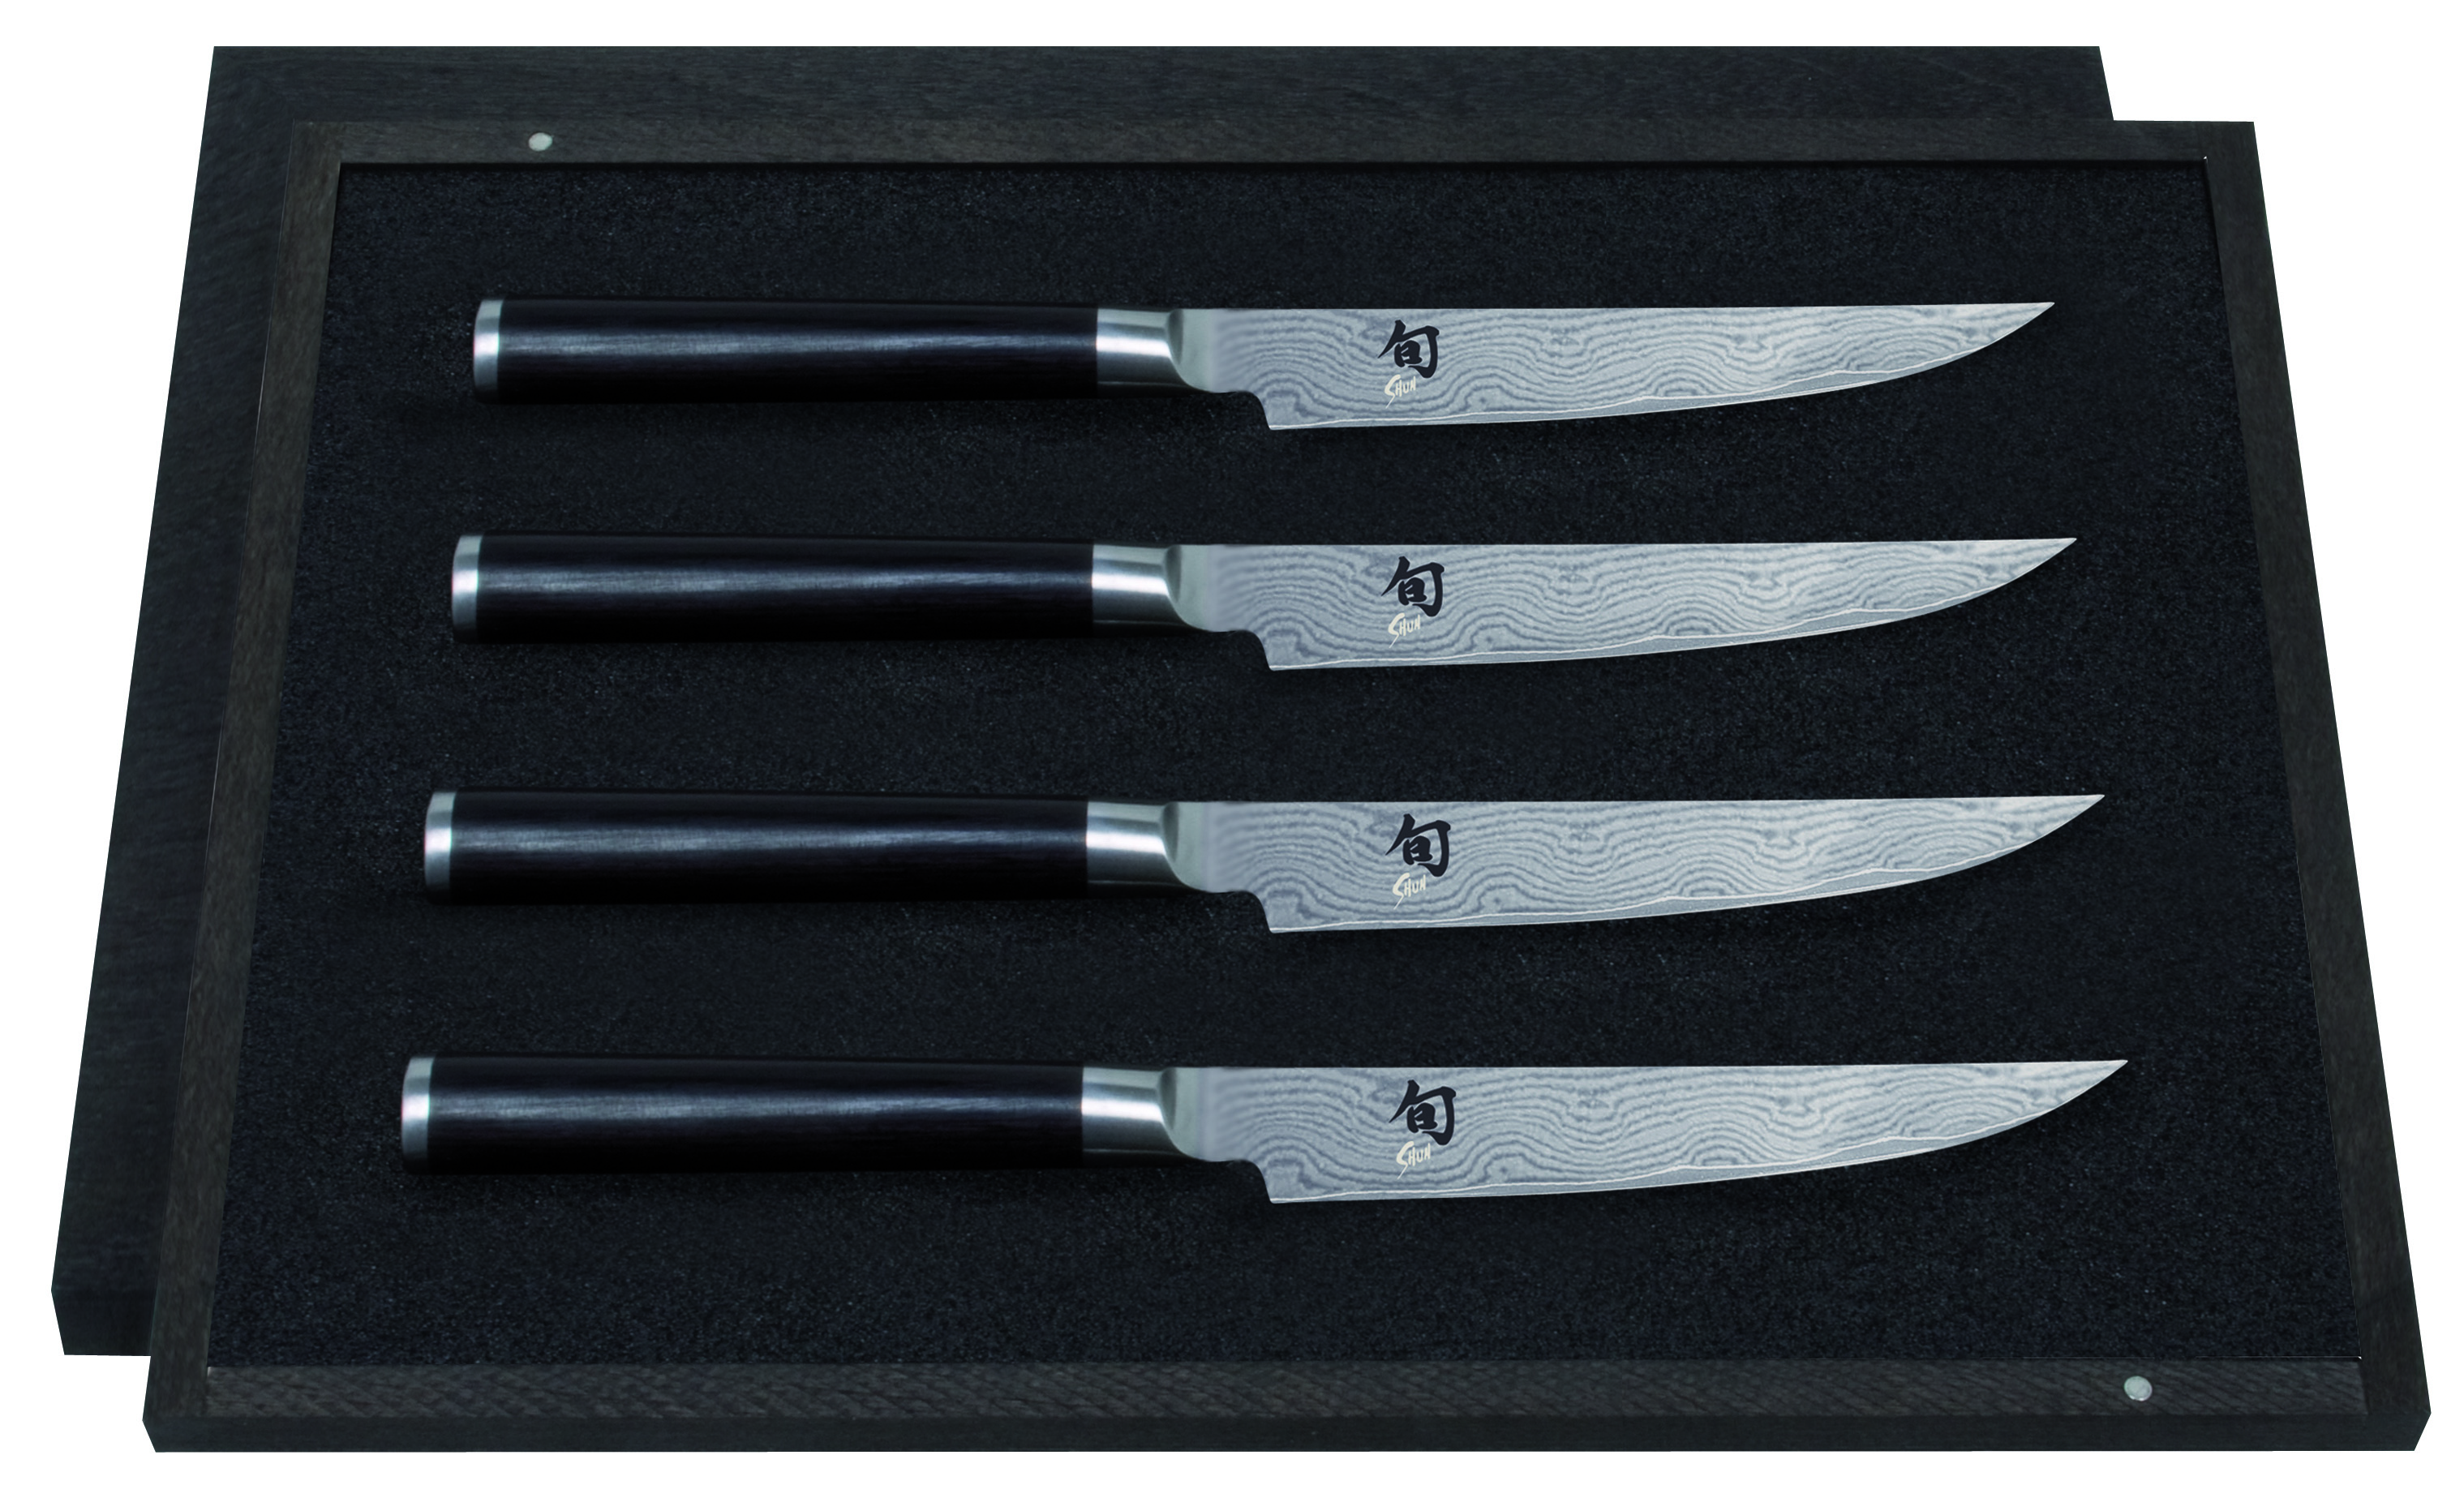 KAI Shun Classic 4-teiliges Steakmesser-Set 12 cm / Damaststahl mit Griff aus dunklem Pakkaholz